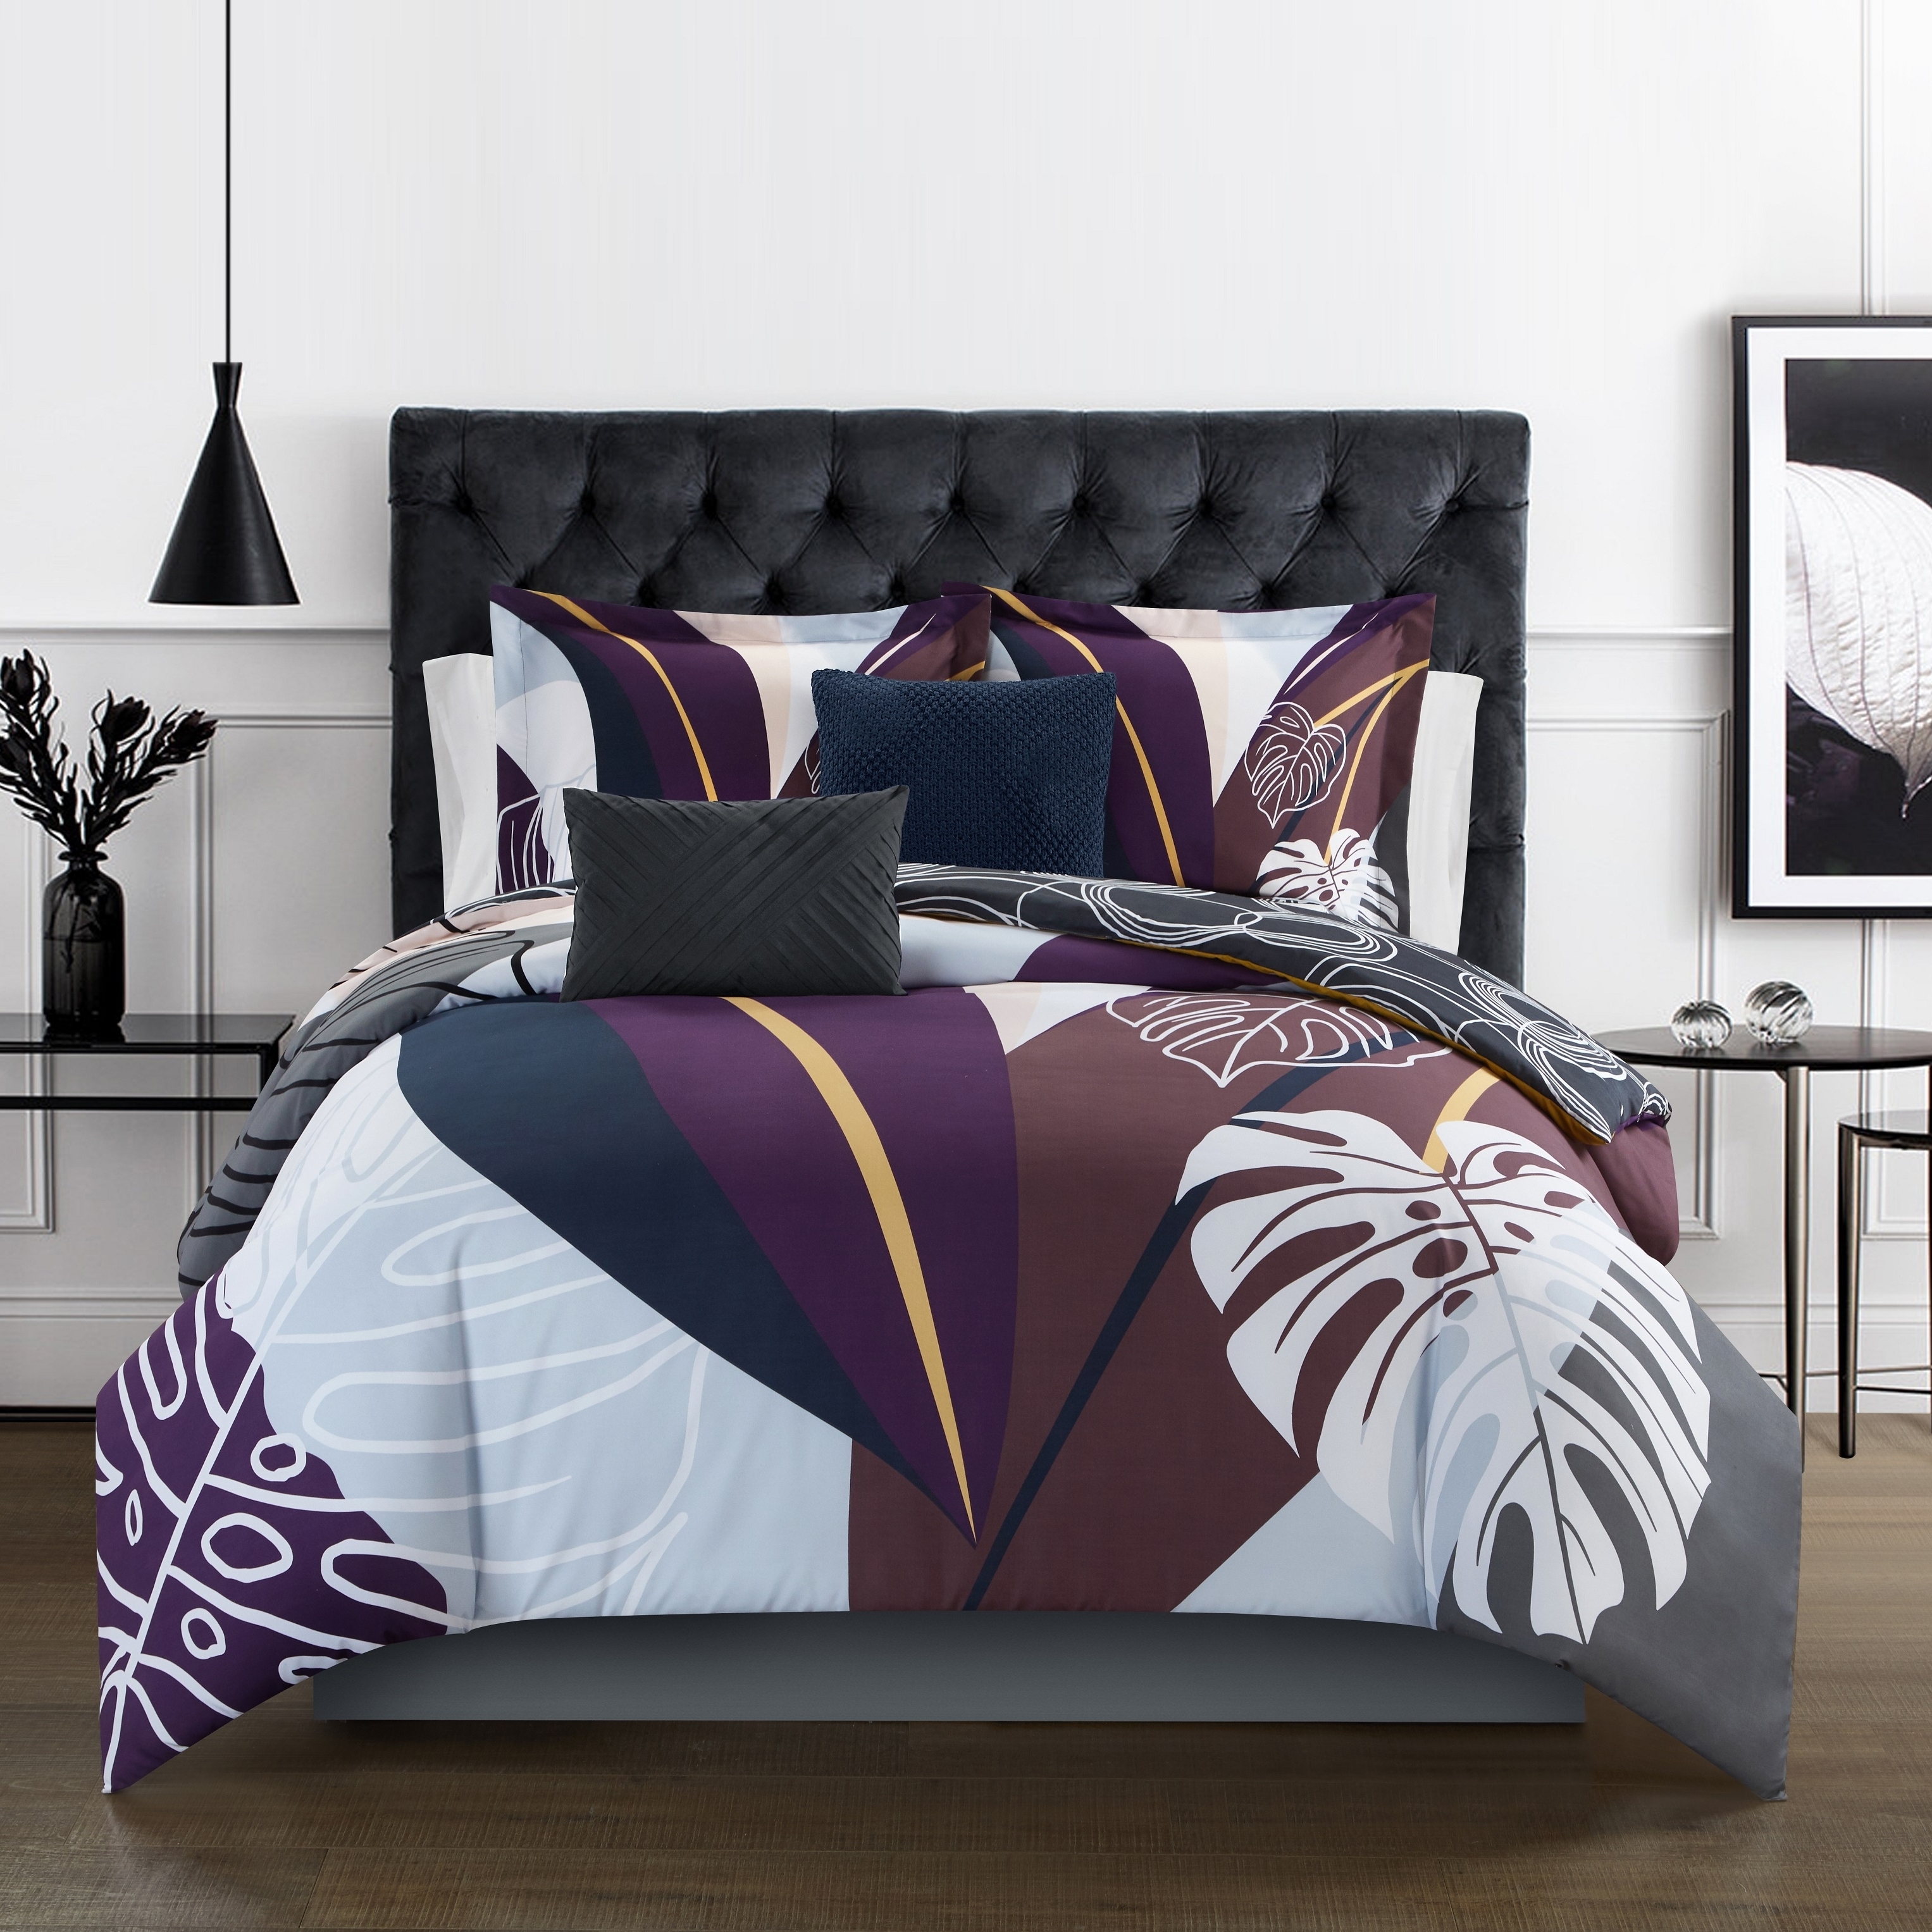 Emeraude 3 Piece Reversible Quilt Set Floral Print Cursive Script Design Bedding - Black, Queen